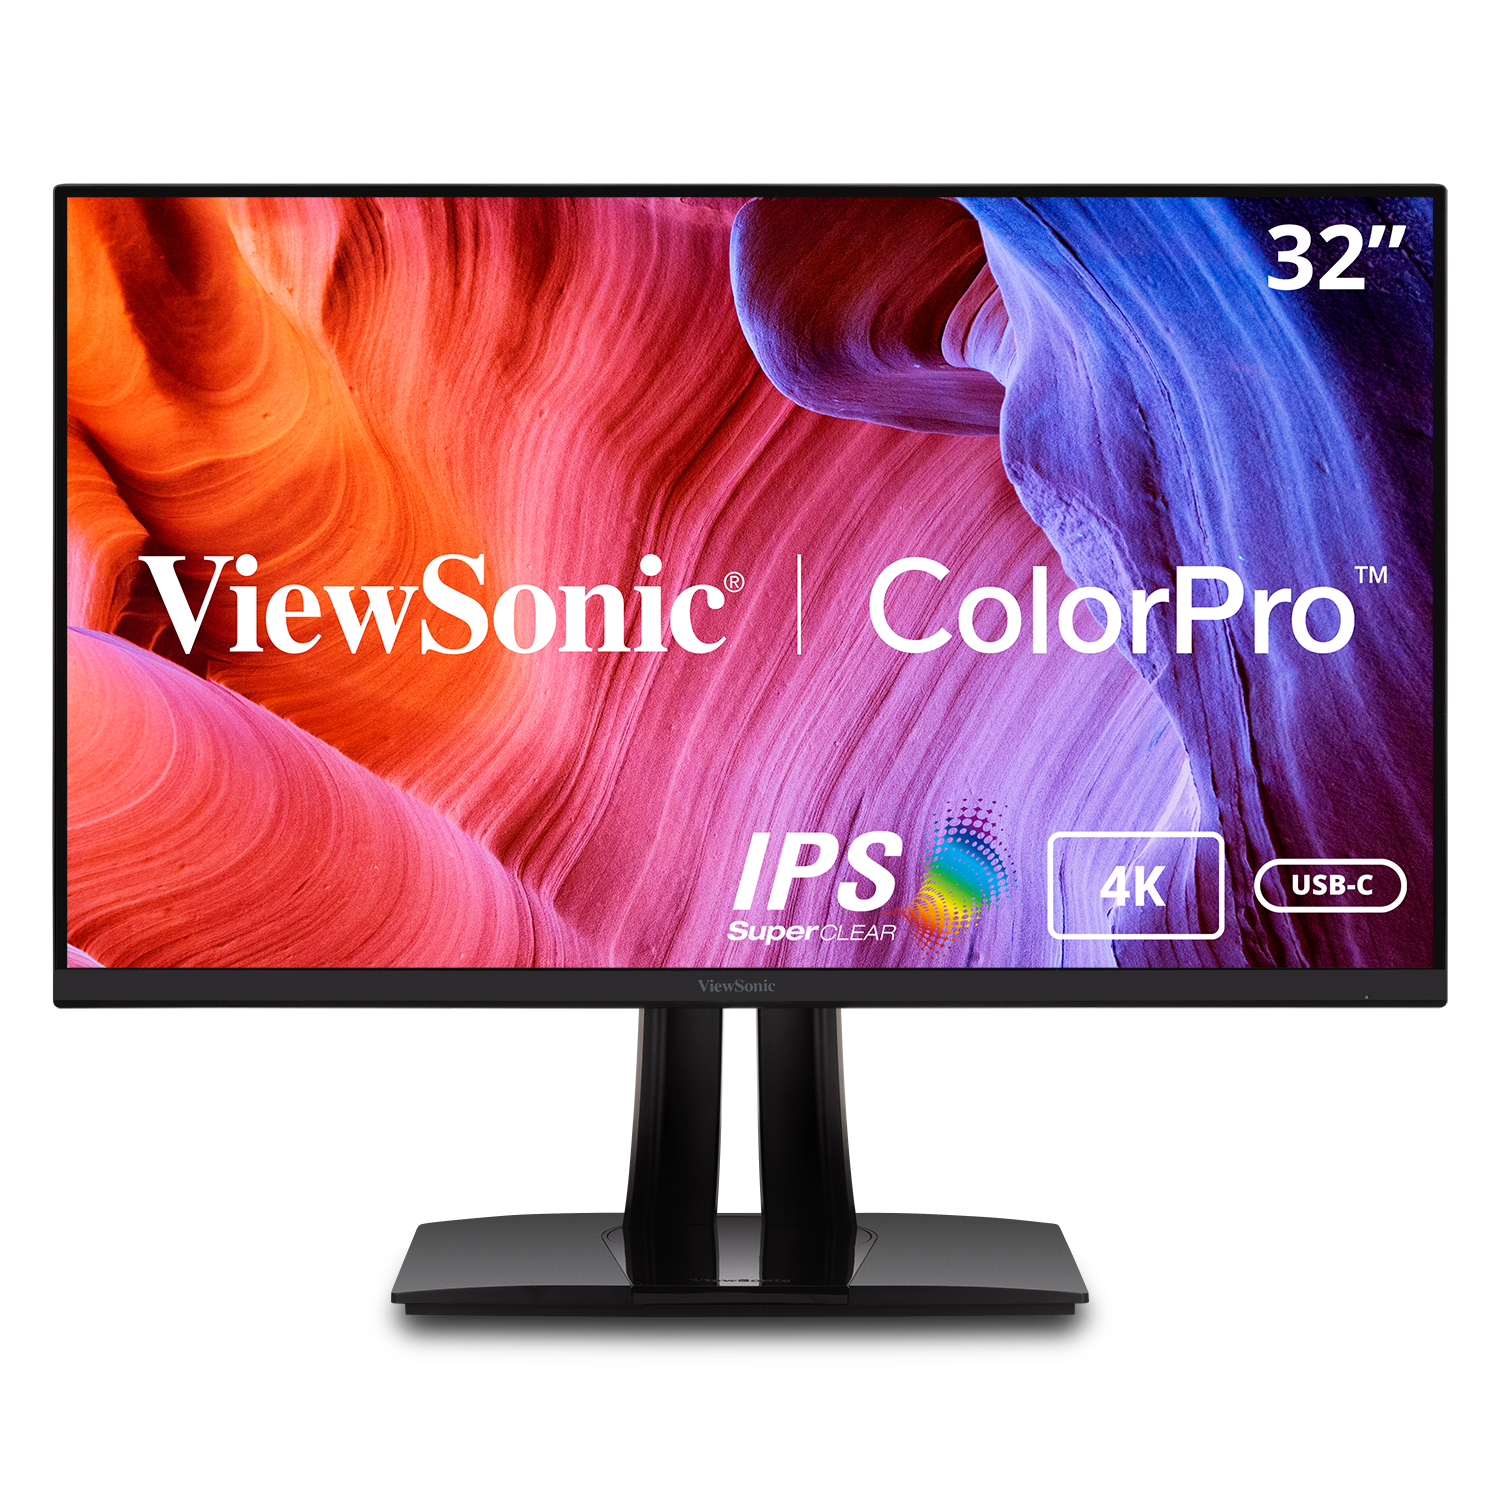 ViewSonic 25 16:9 360 Hz HDR400 IPS Gaming Monitor XG251G B&H